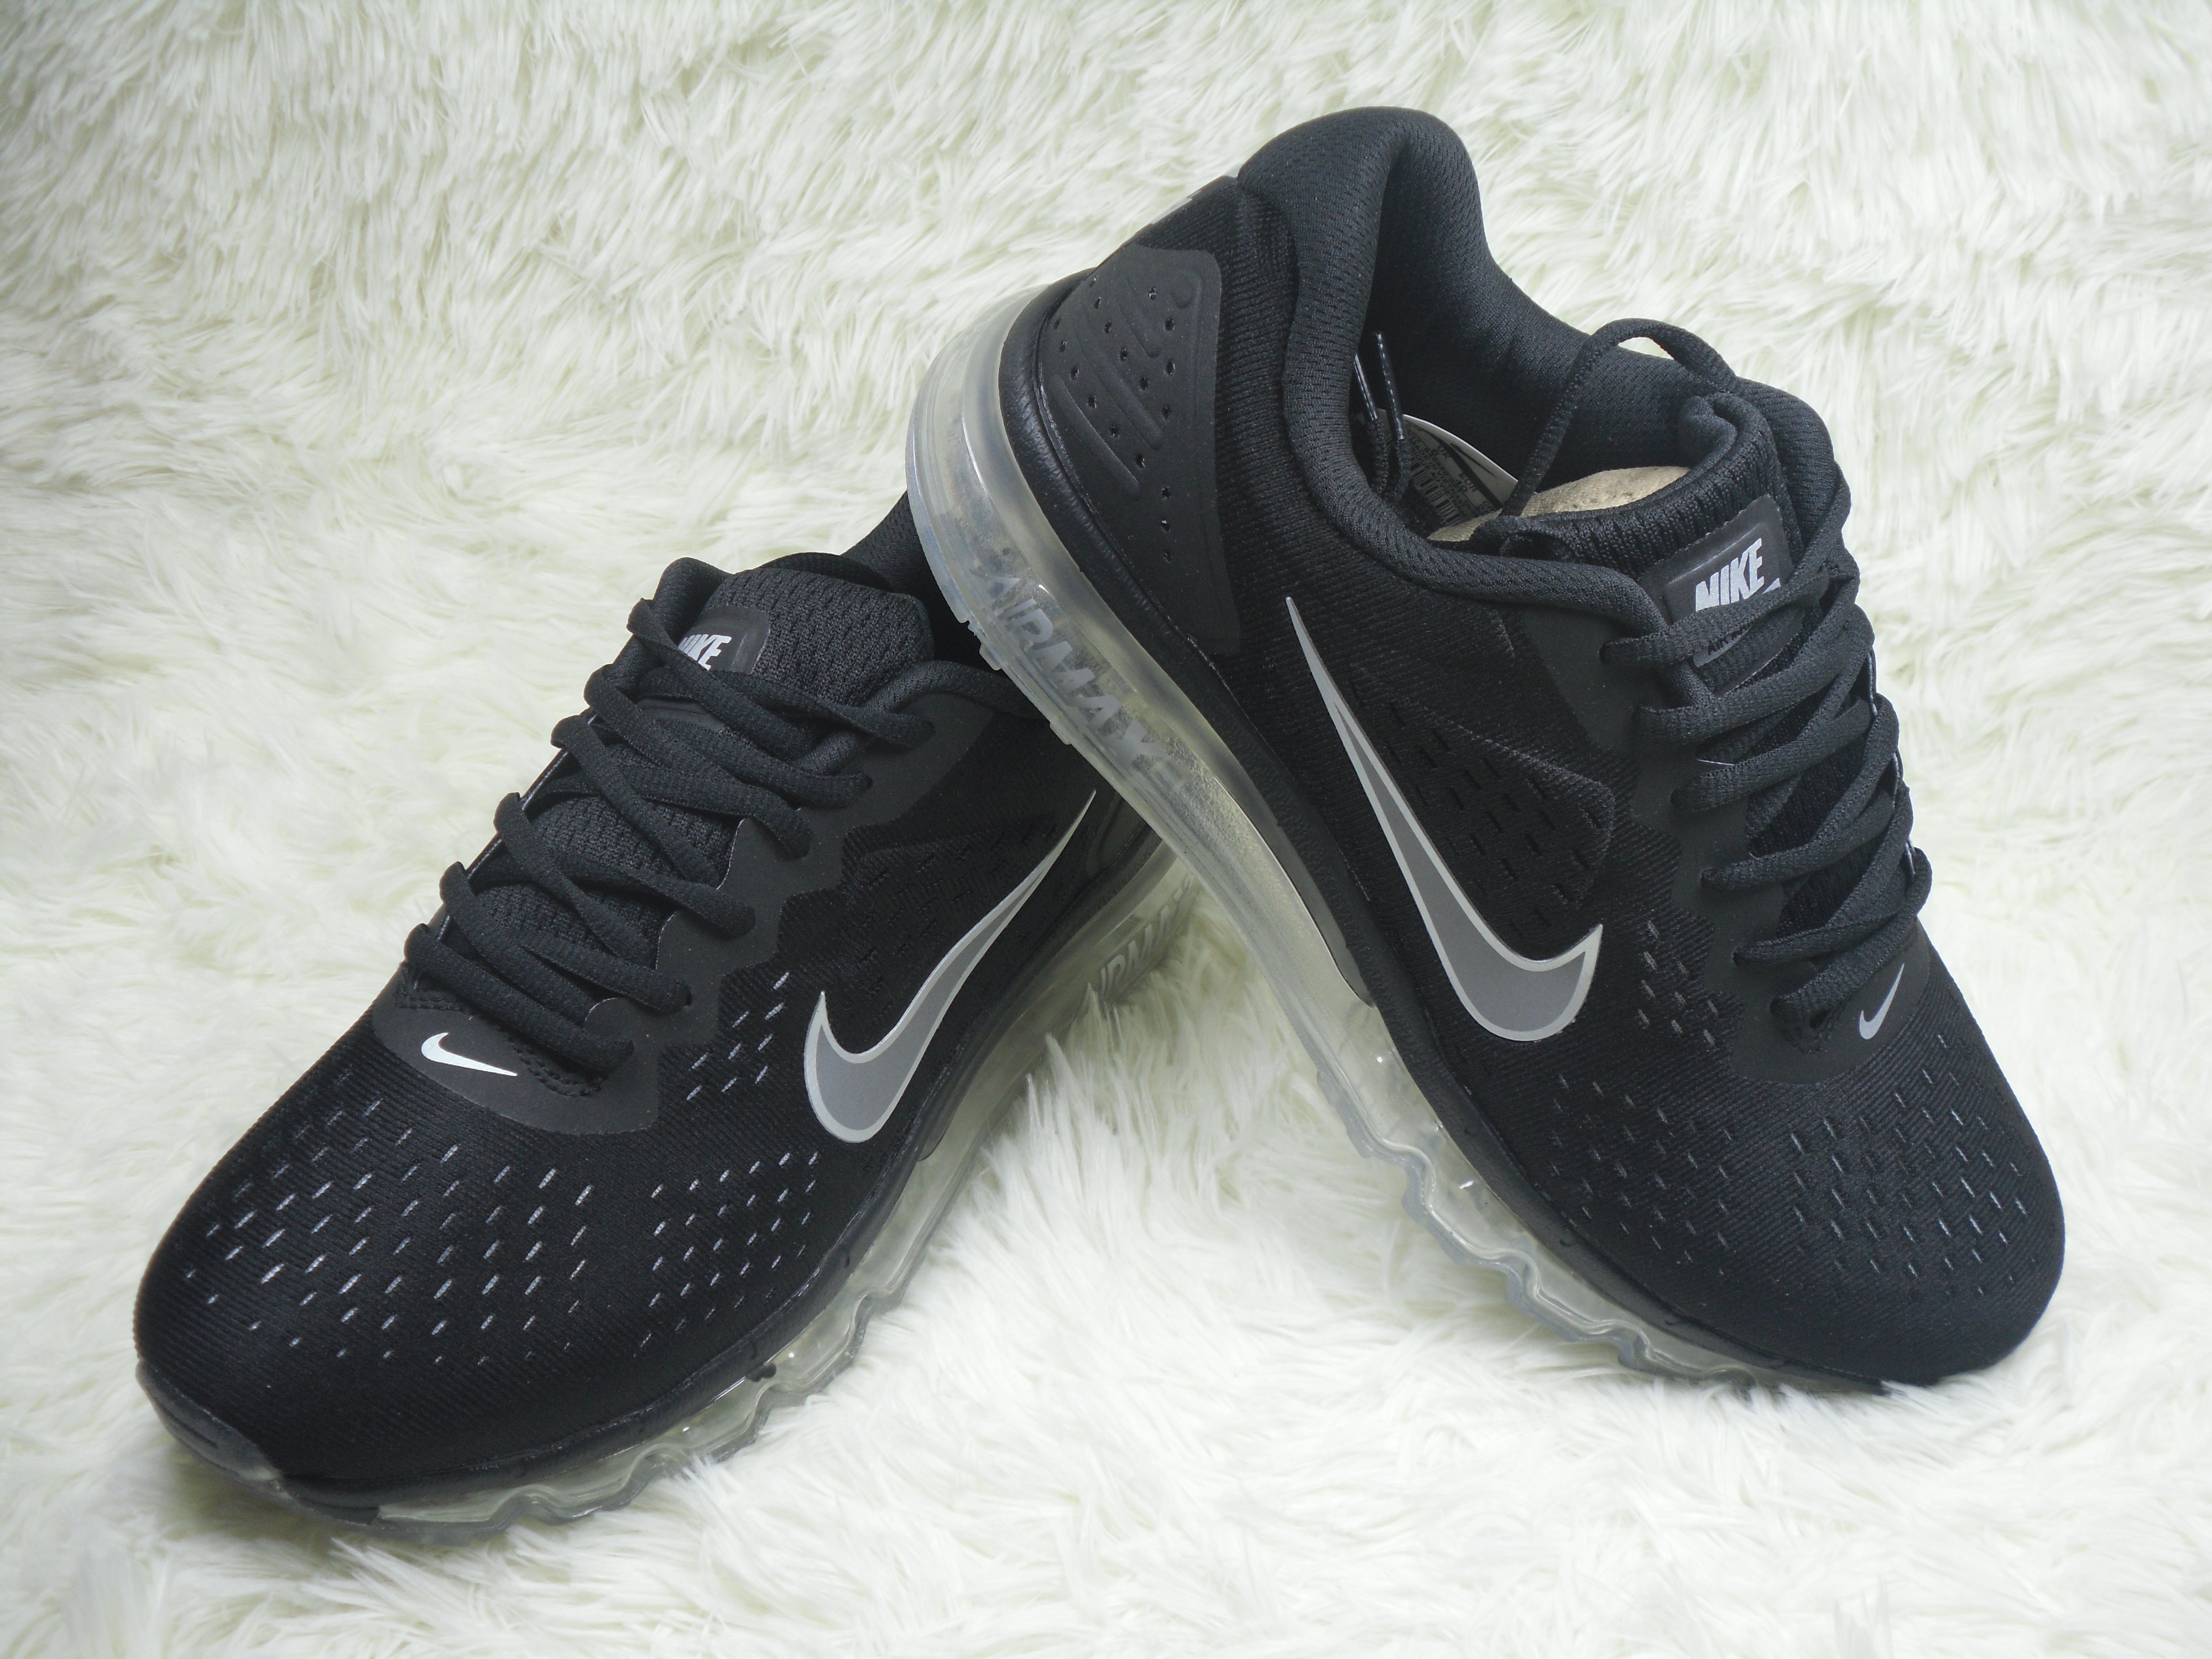 New Men Nike Air Max 2019 Black Grey Shoes